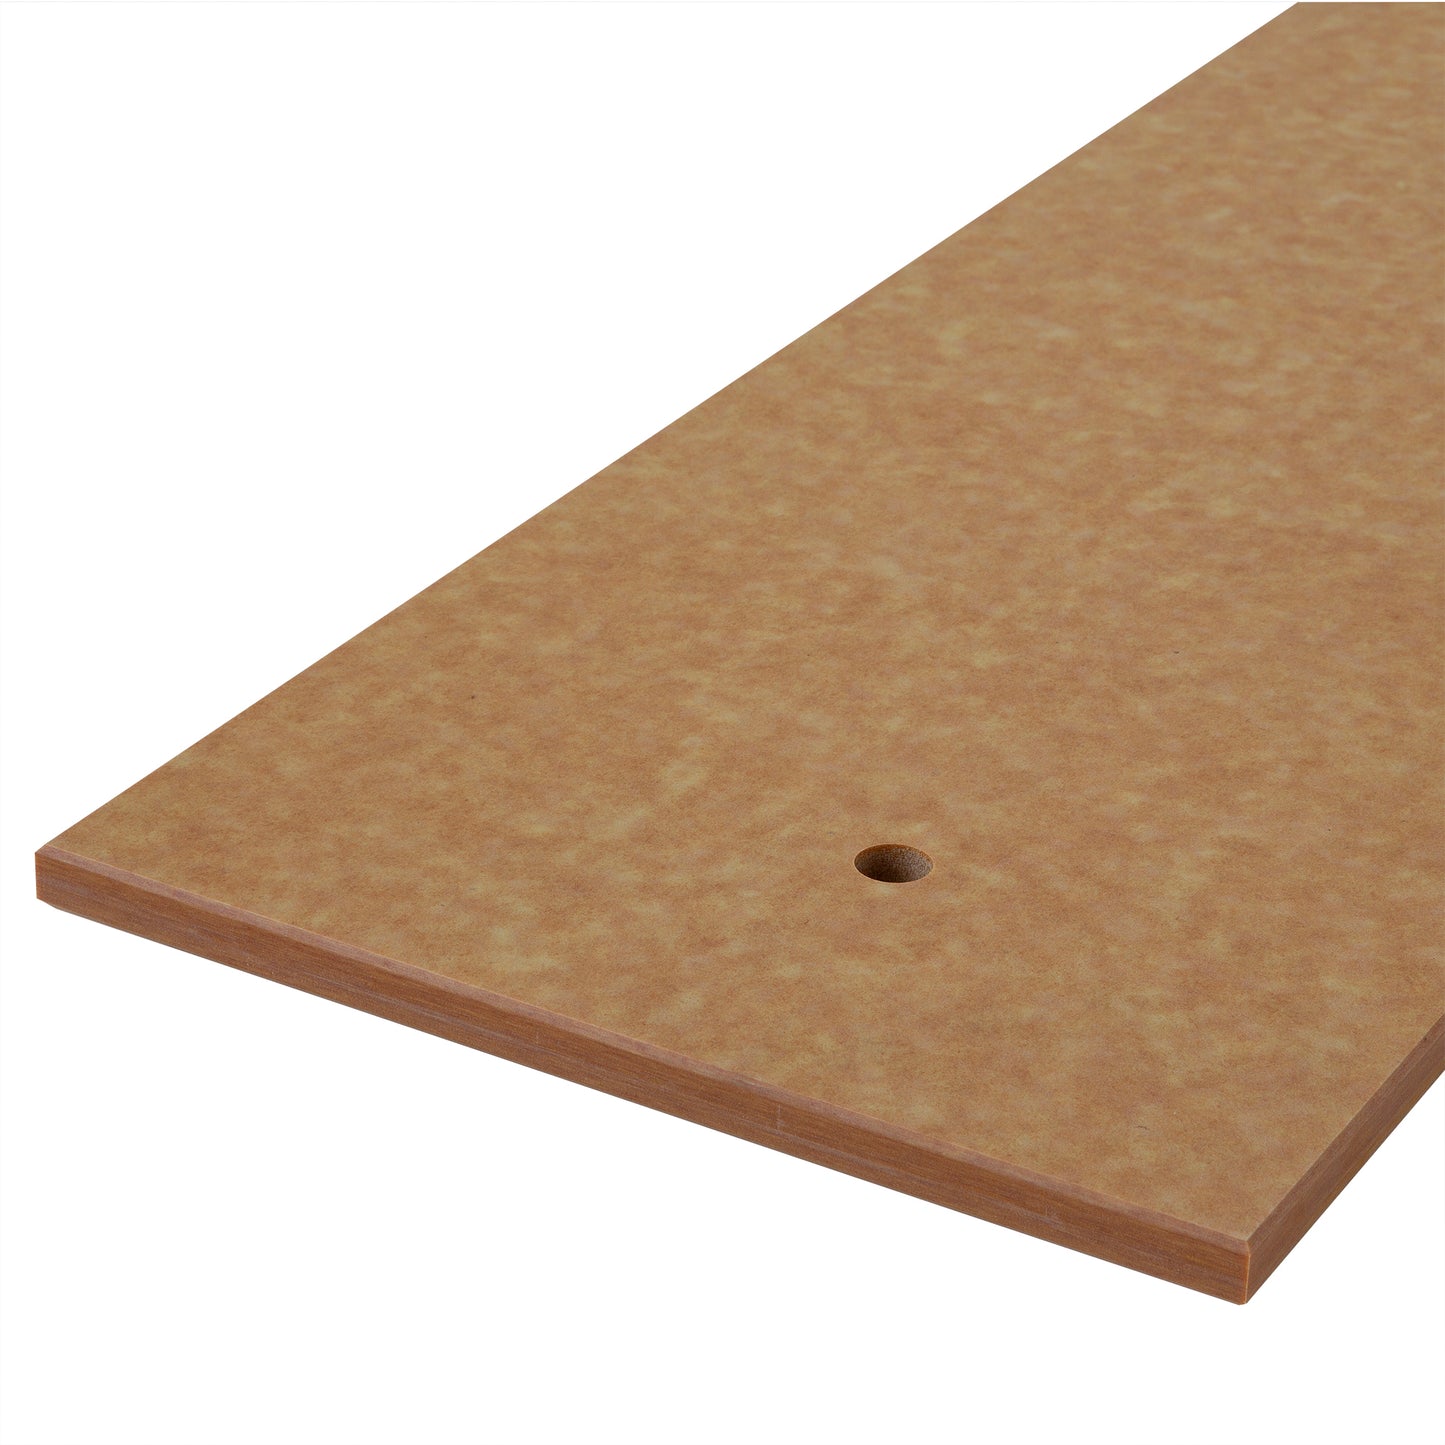 Composite wood-tone cutting board - 1/2" X 8-7/8" X 36" (SKU - 820616)